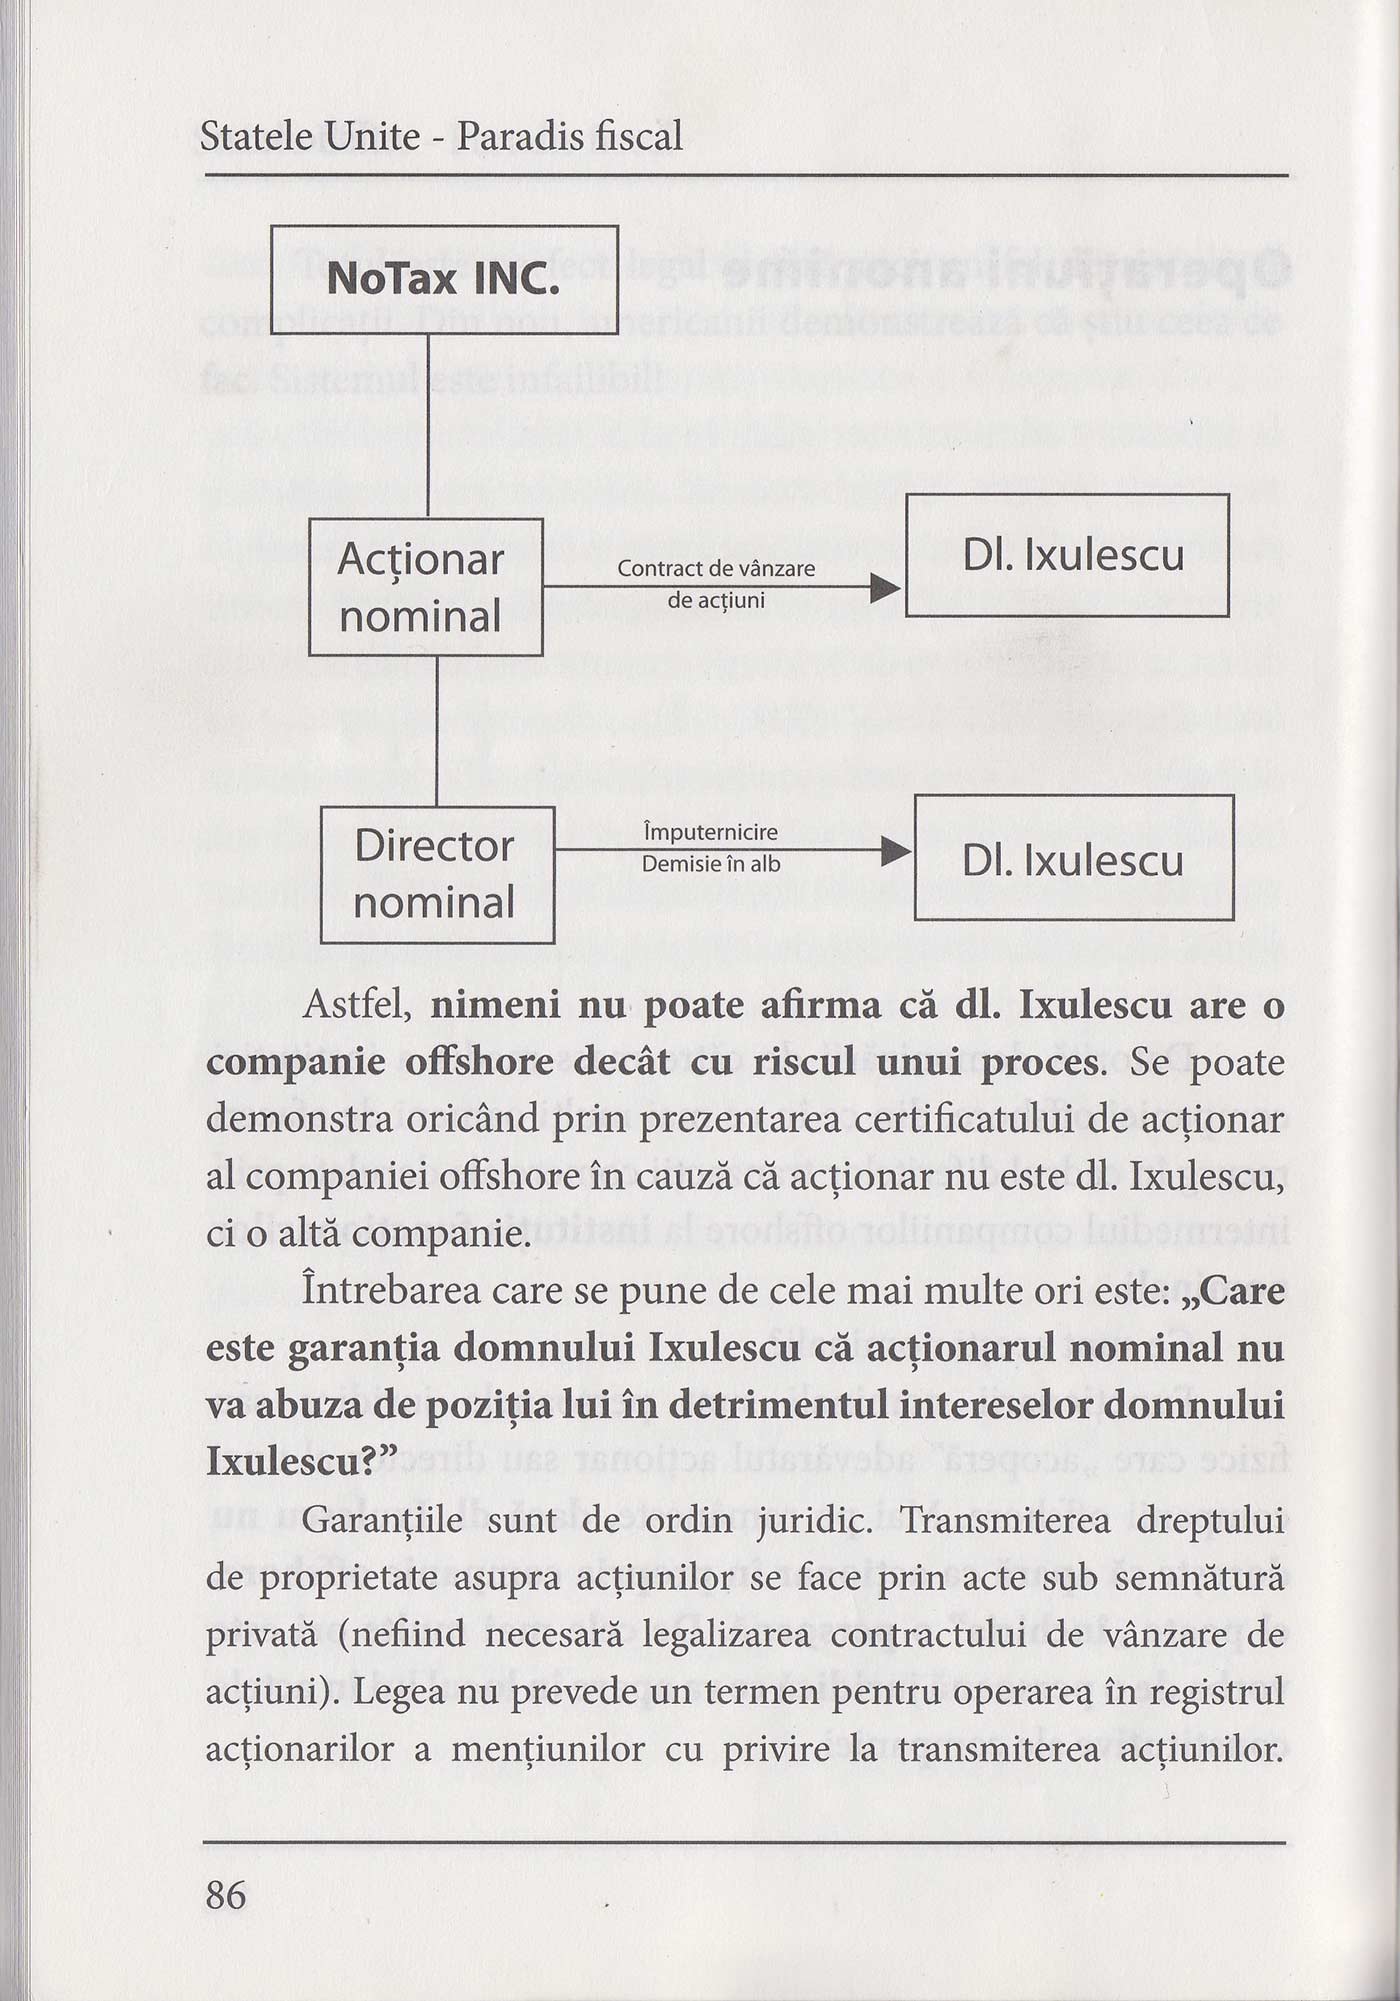 offshore-crime/Document-Book-Scheme-1.jpg